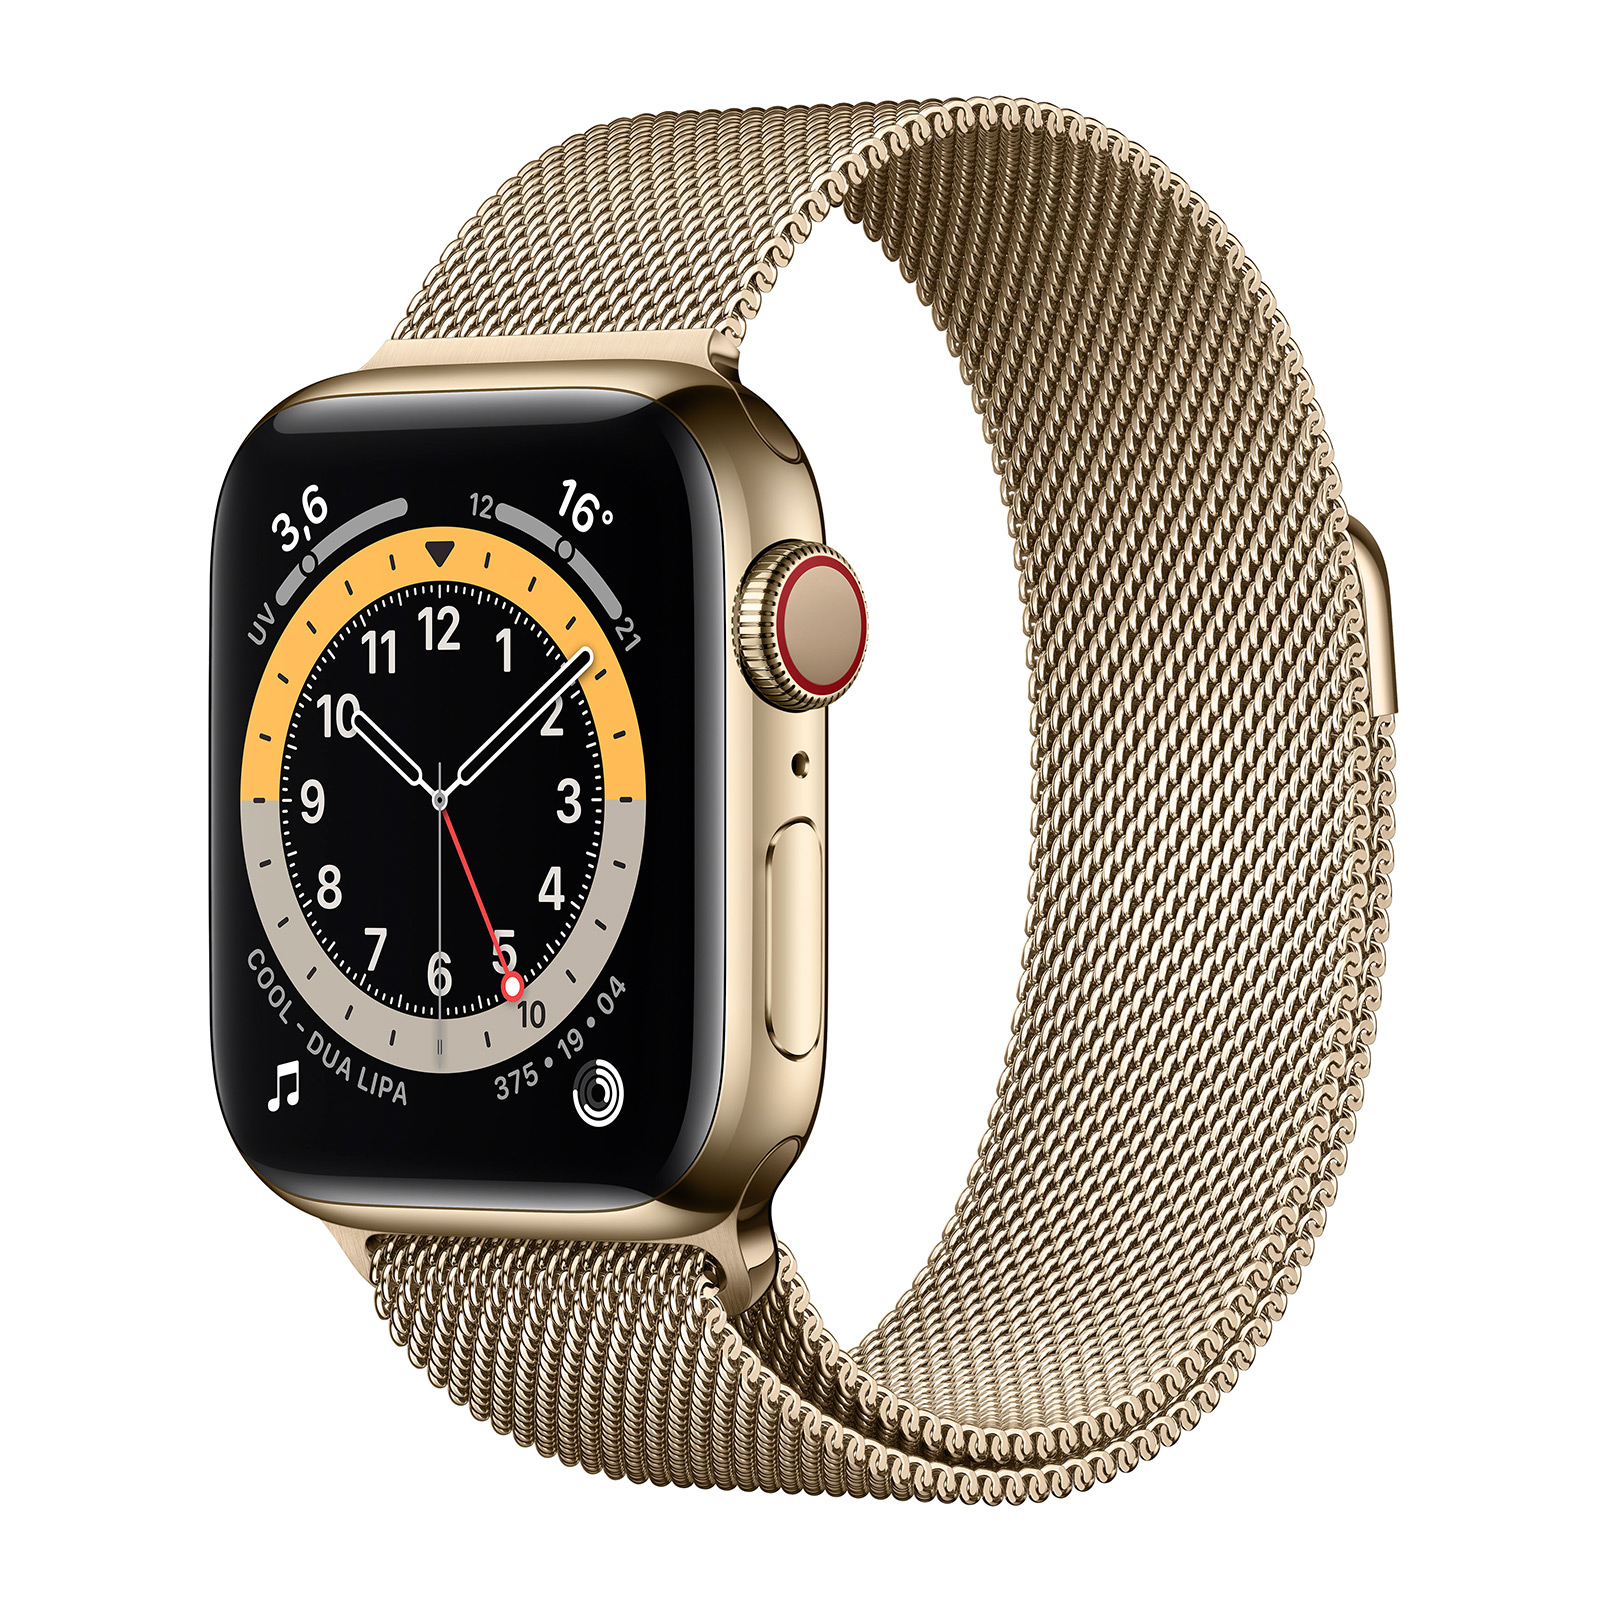 Apple Watch Series 6 GPS + Cellular Stainless steel Gold Bracelet